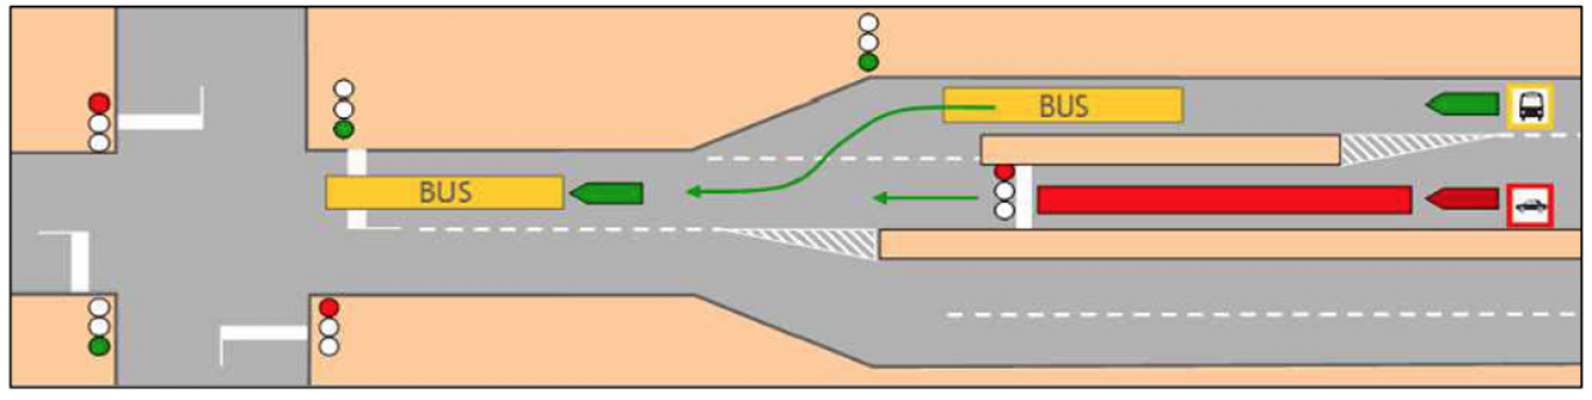 L dessegn che simbolisea l sistem de BRT per ge dèr la prezedenza al trasport publich respet a chel privat.
